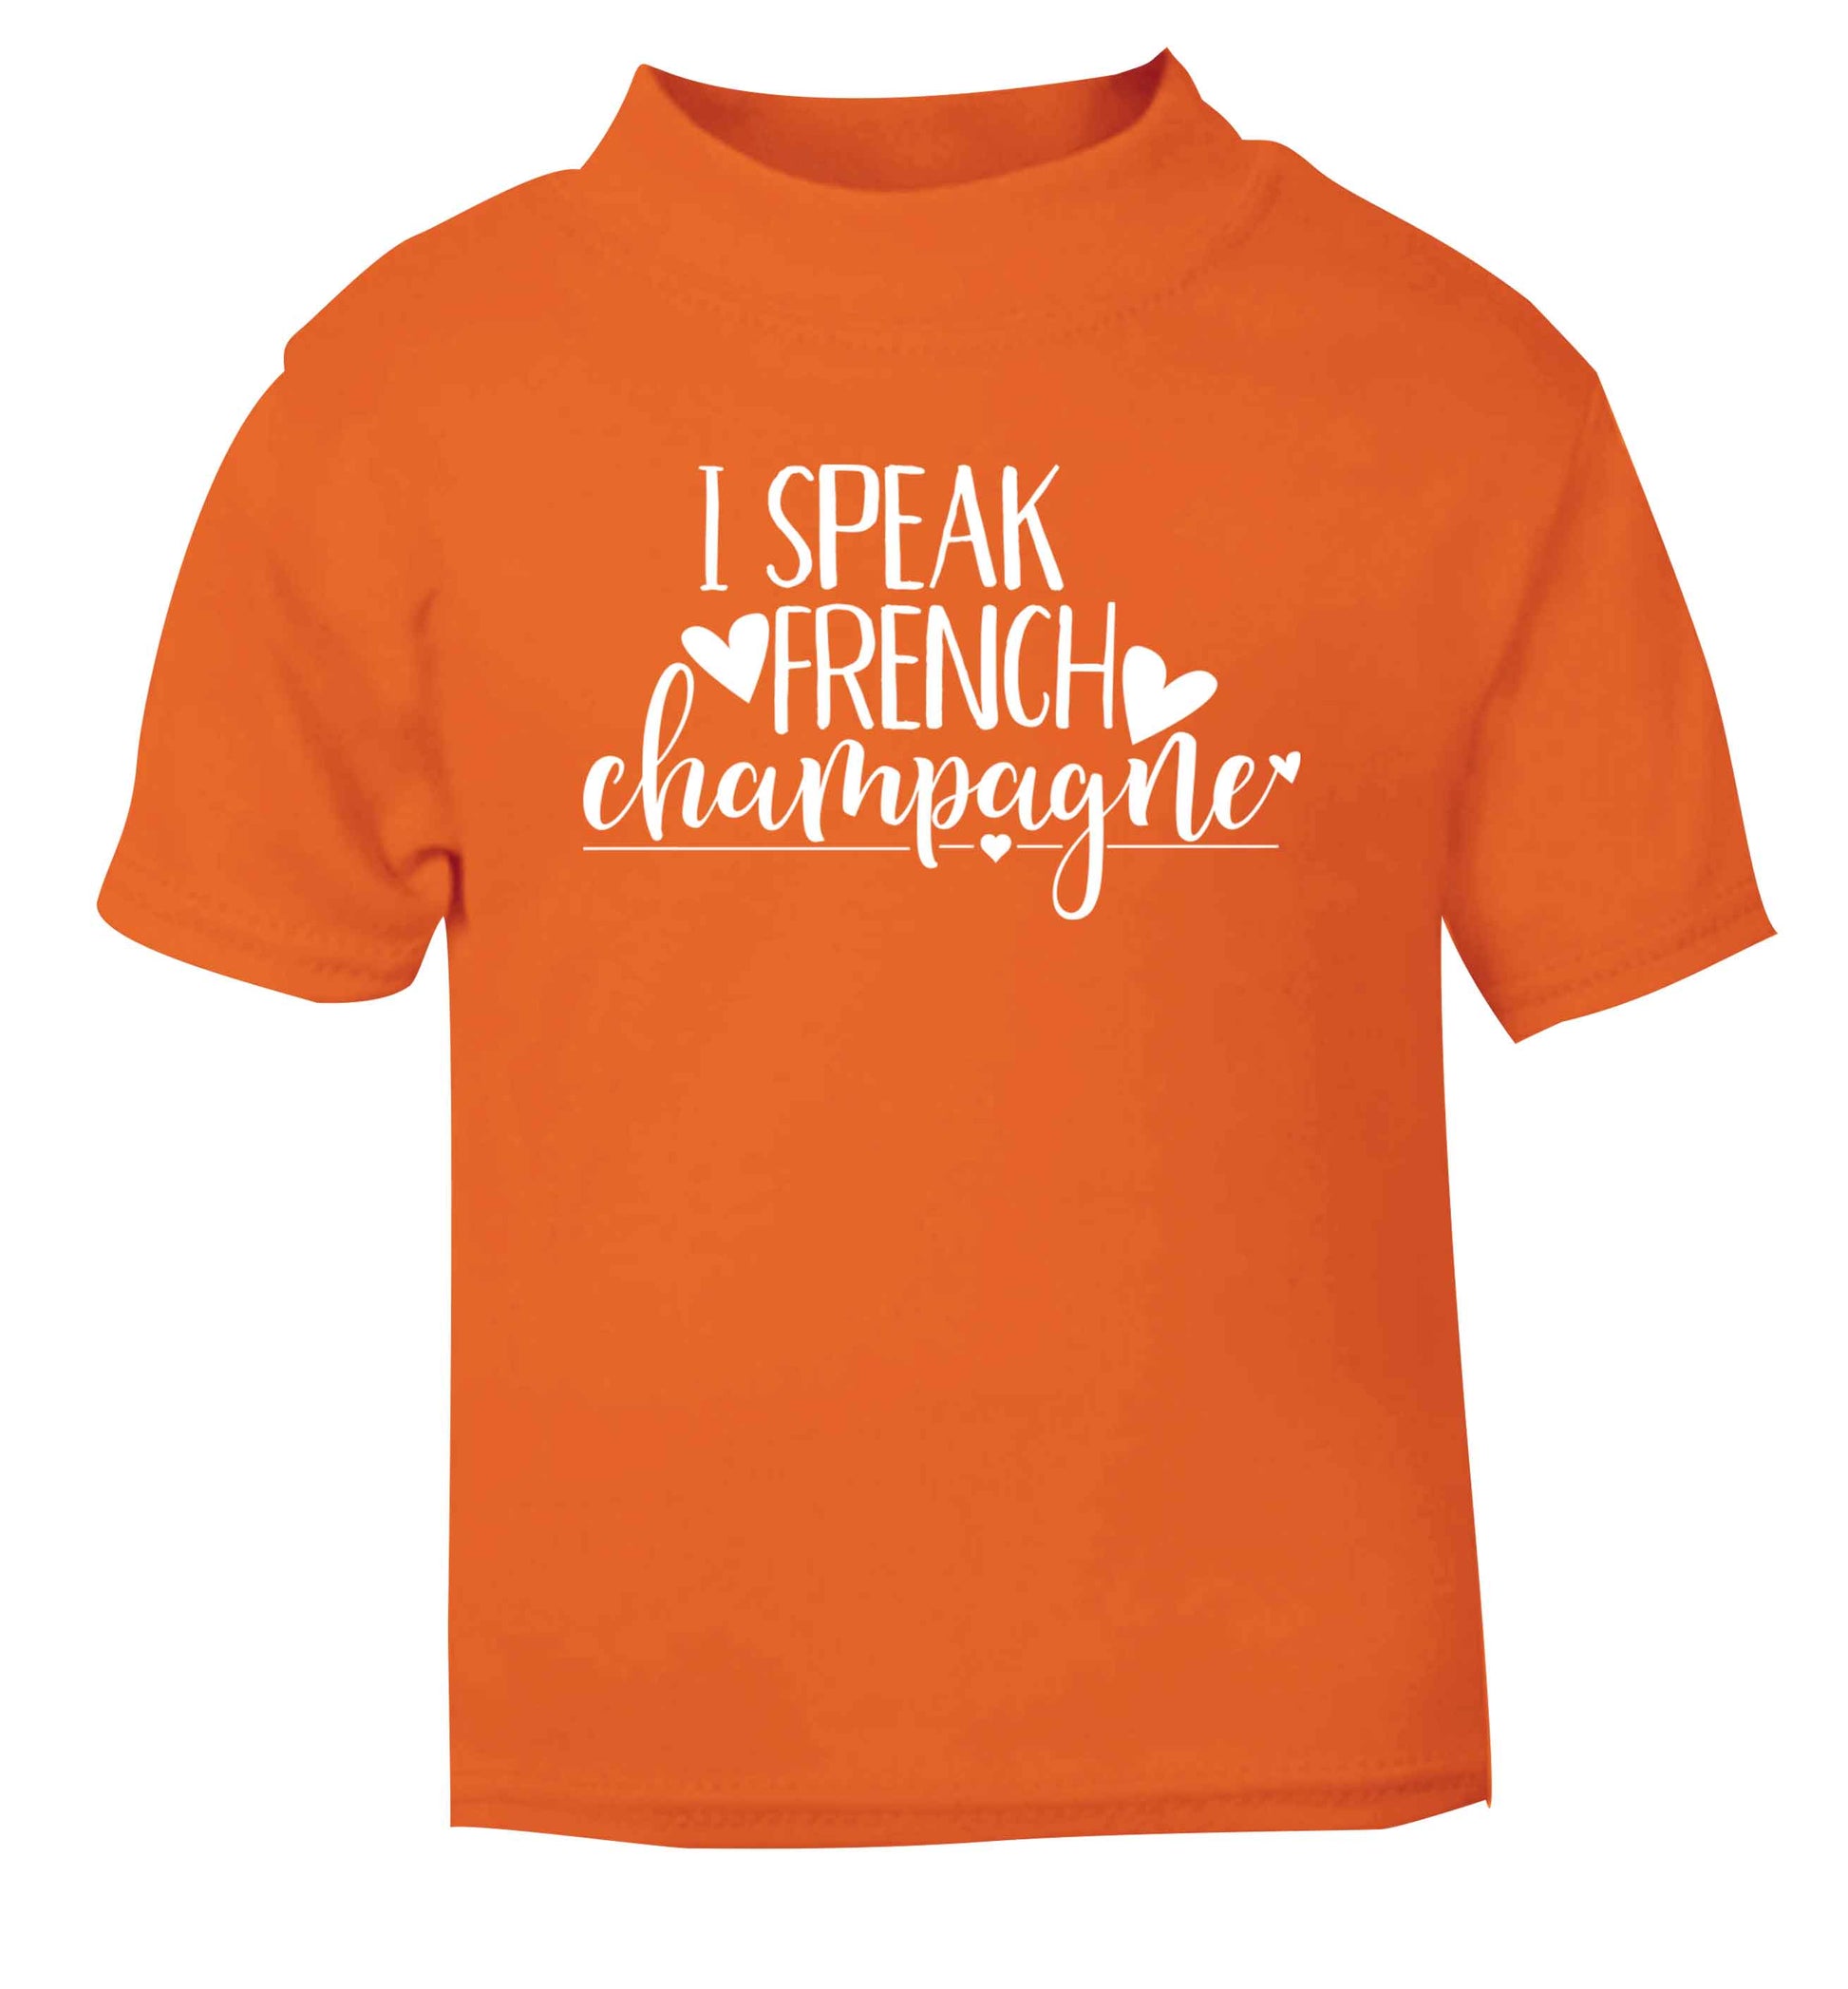 I speak french champagne orange Baby Toddler Tshirt 2 Years